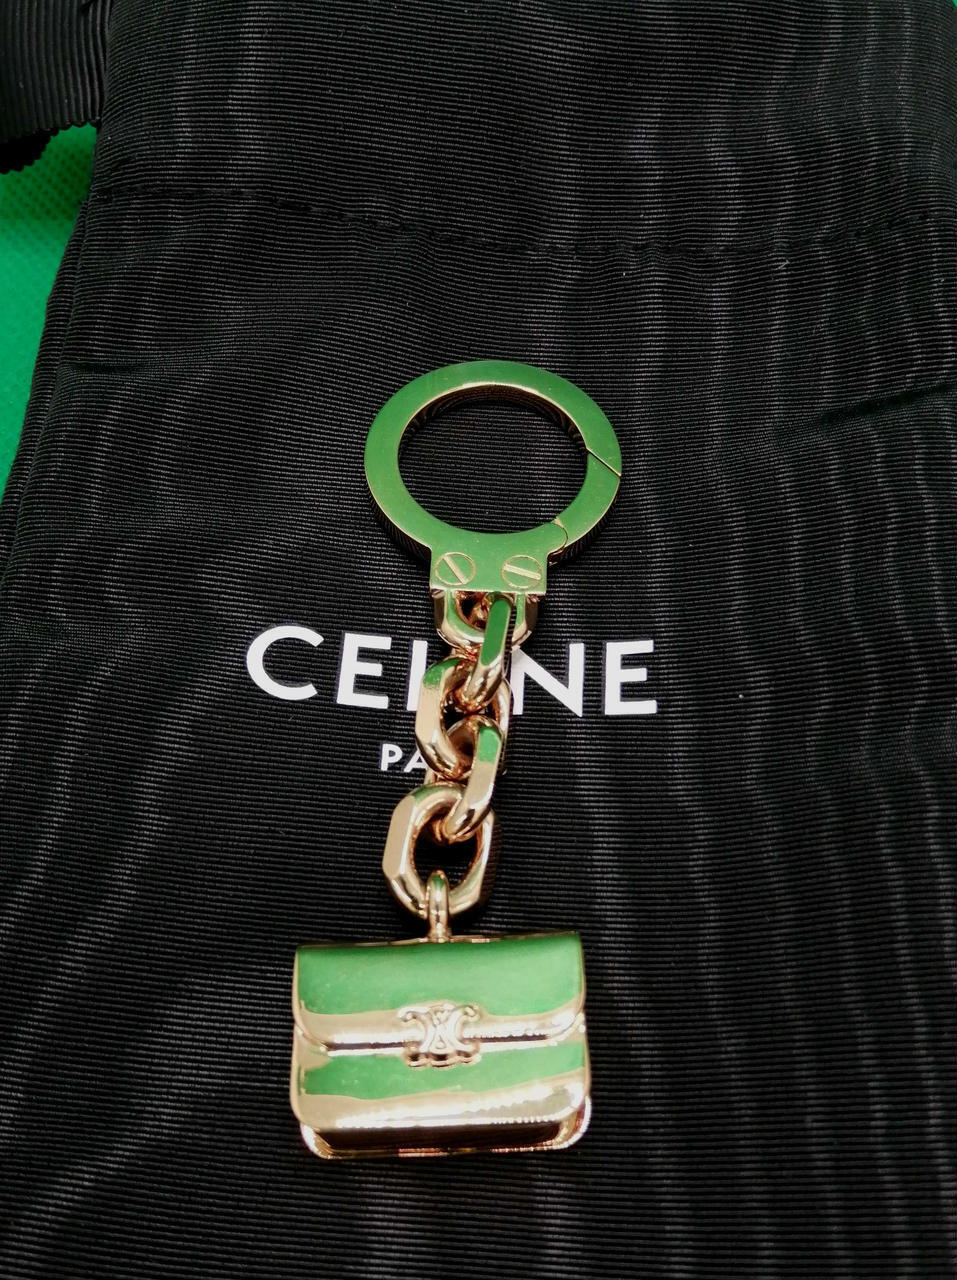 Celine Bag Charm Key Chain